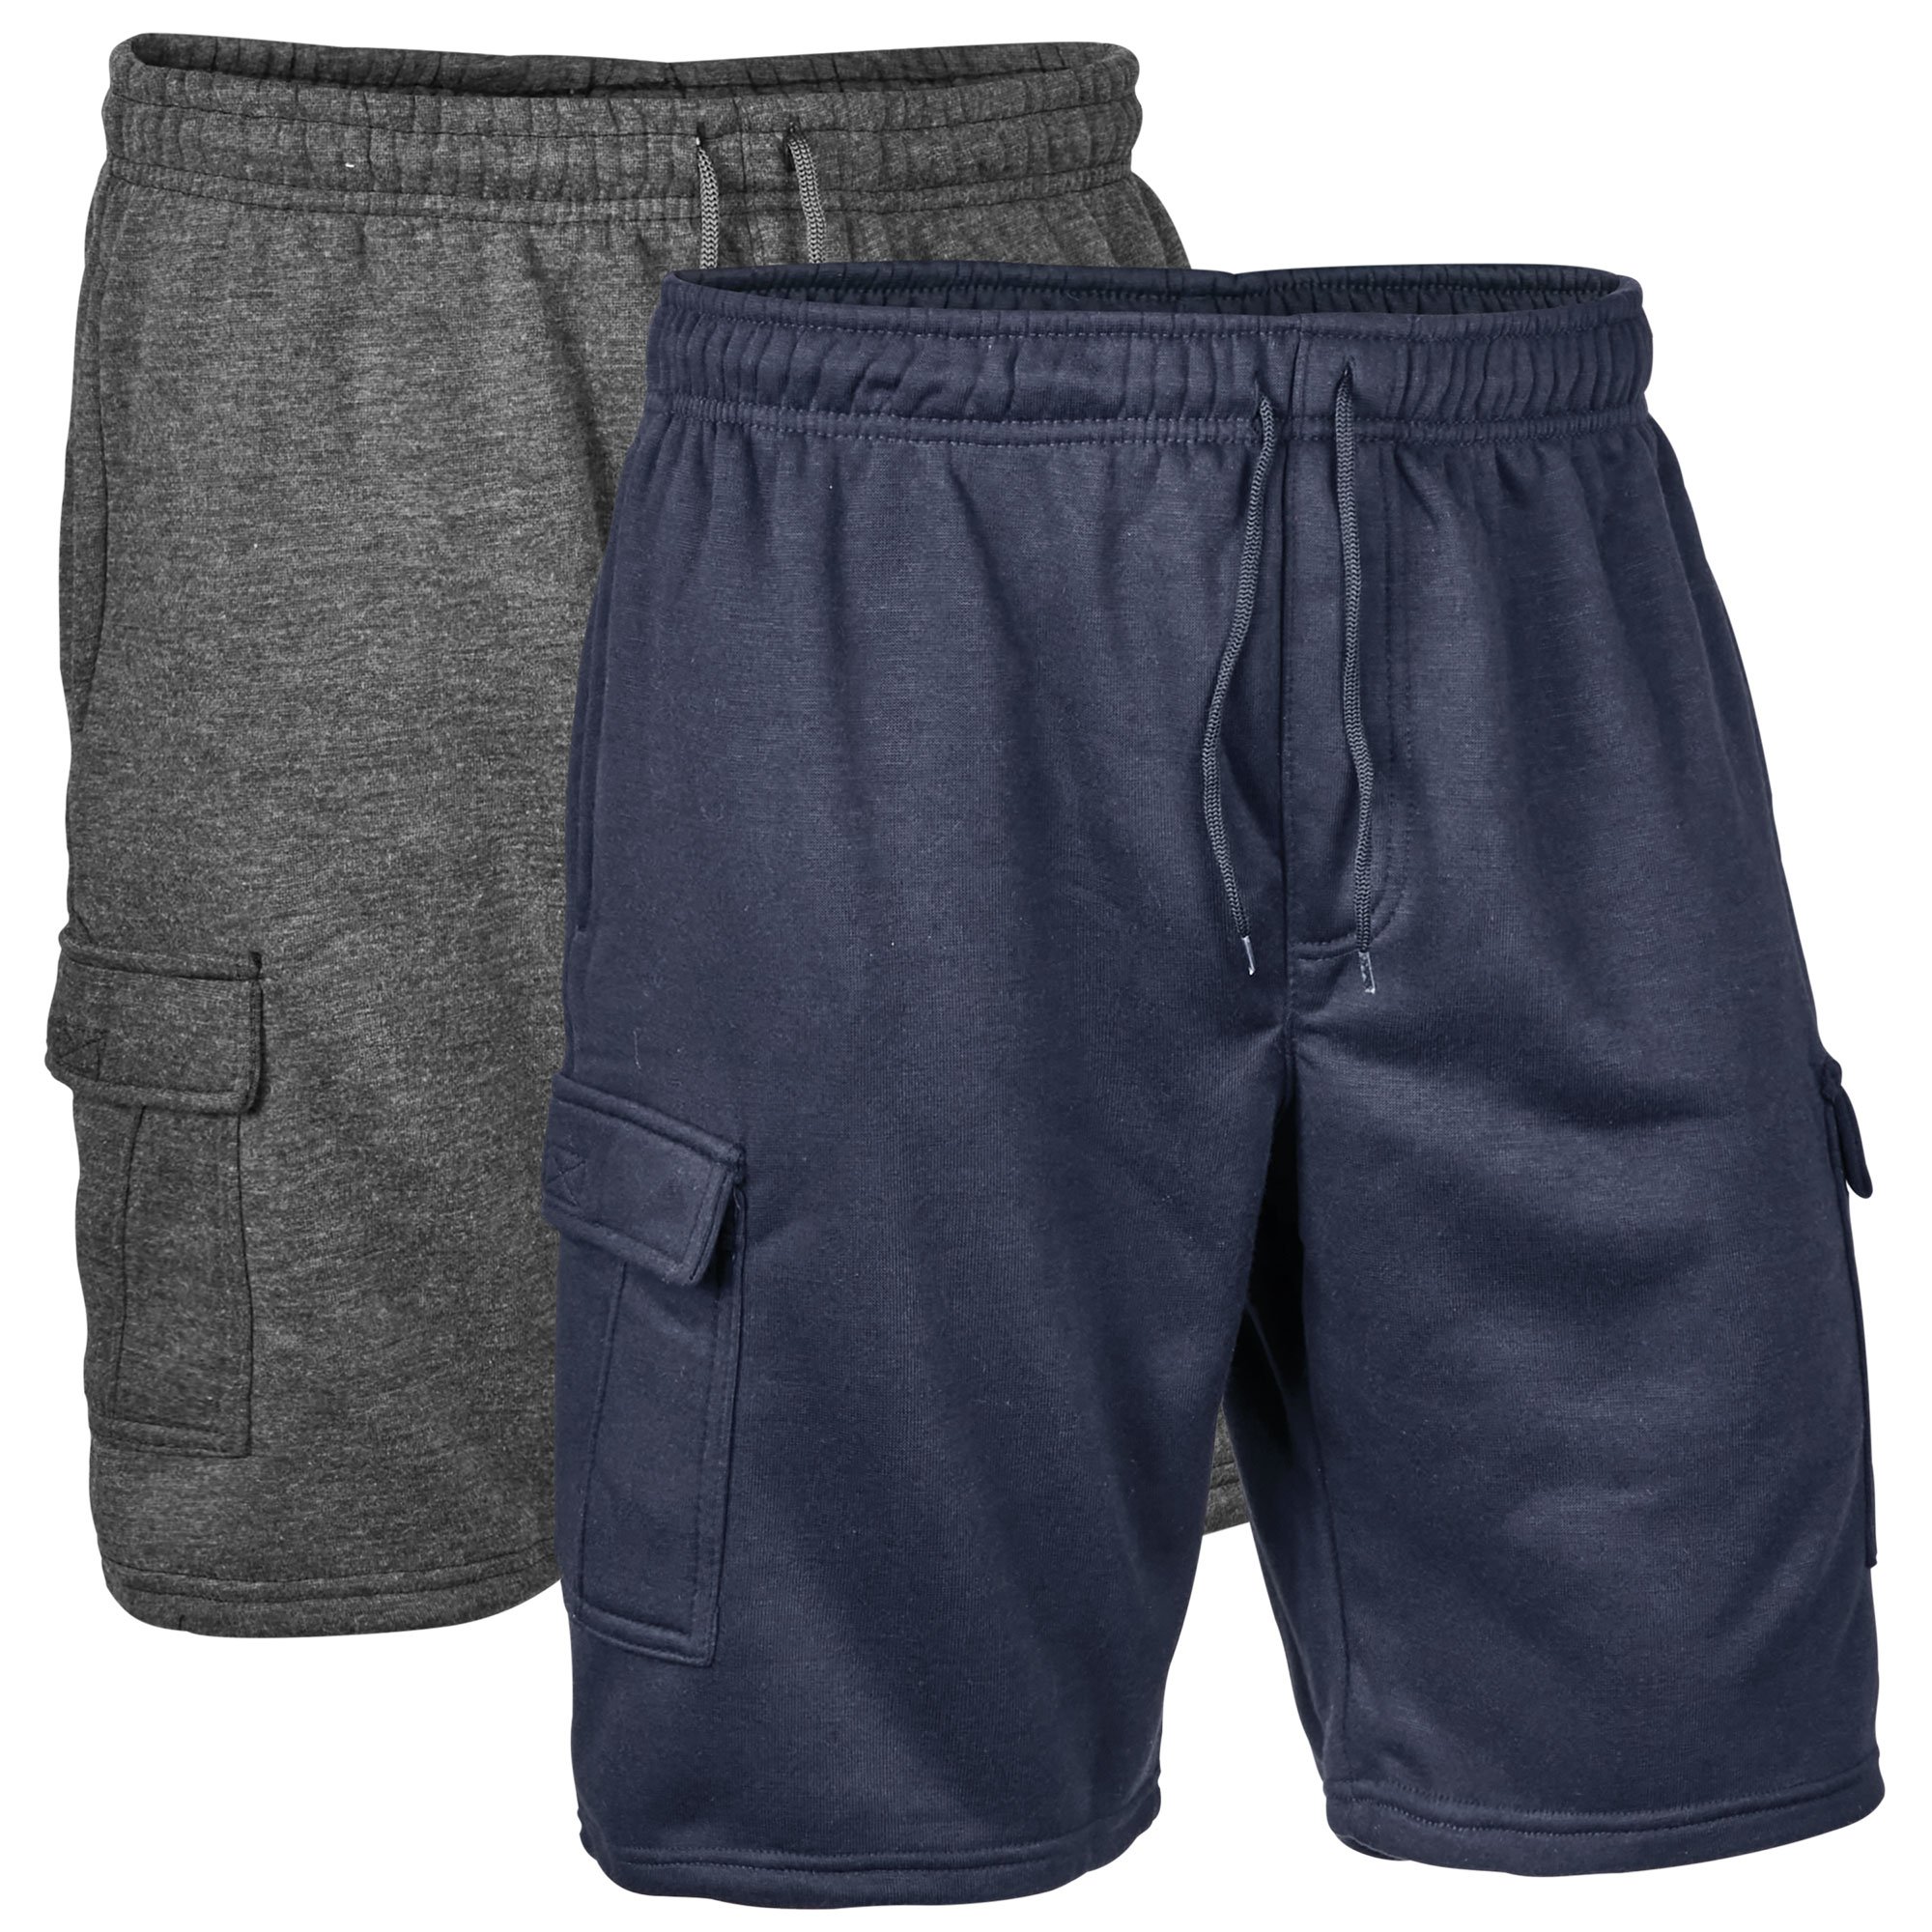 Fleece Cargo Shorts 2 Pack - Navy/Charcoal